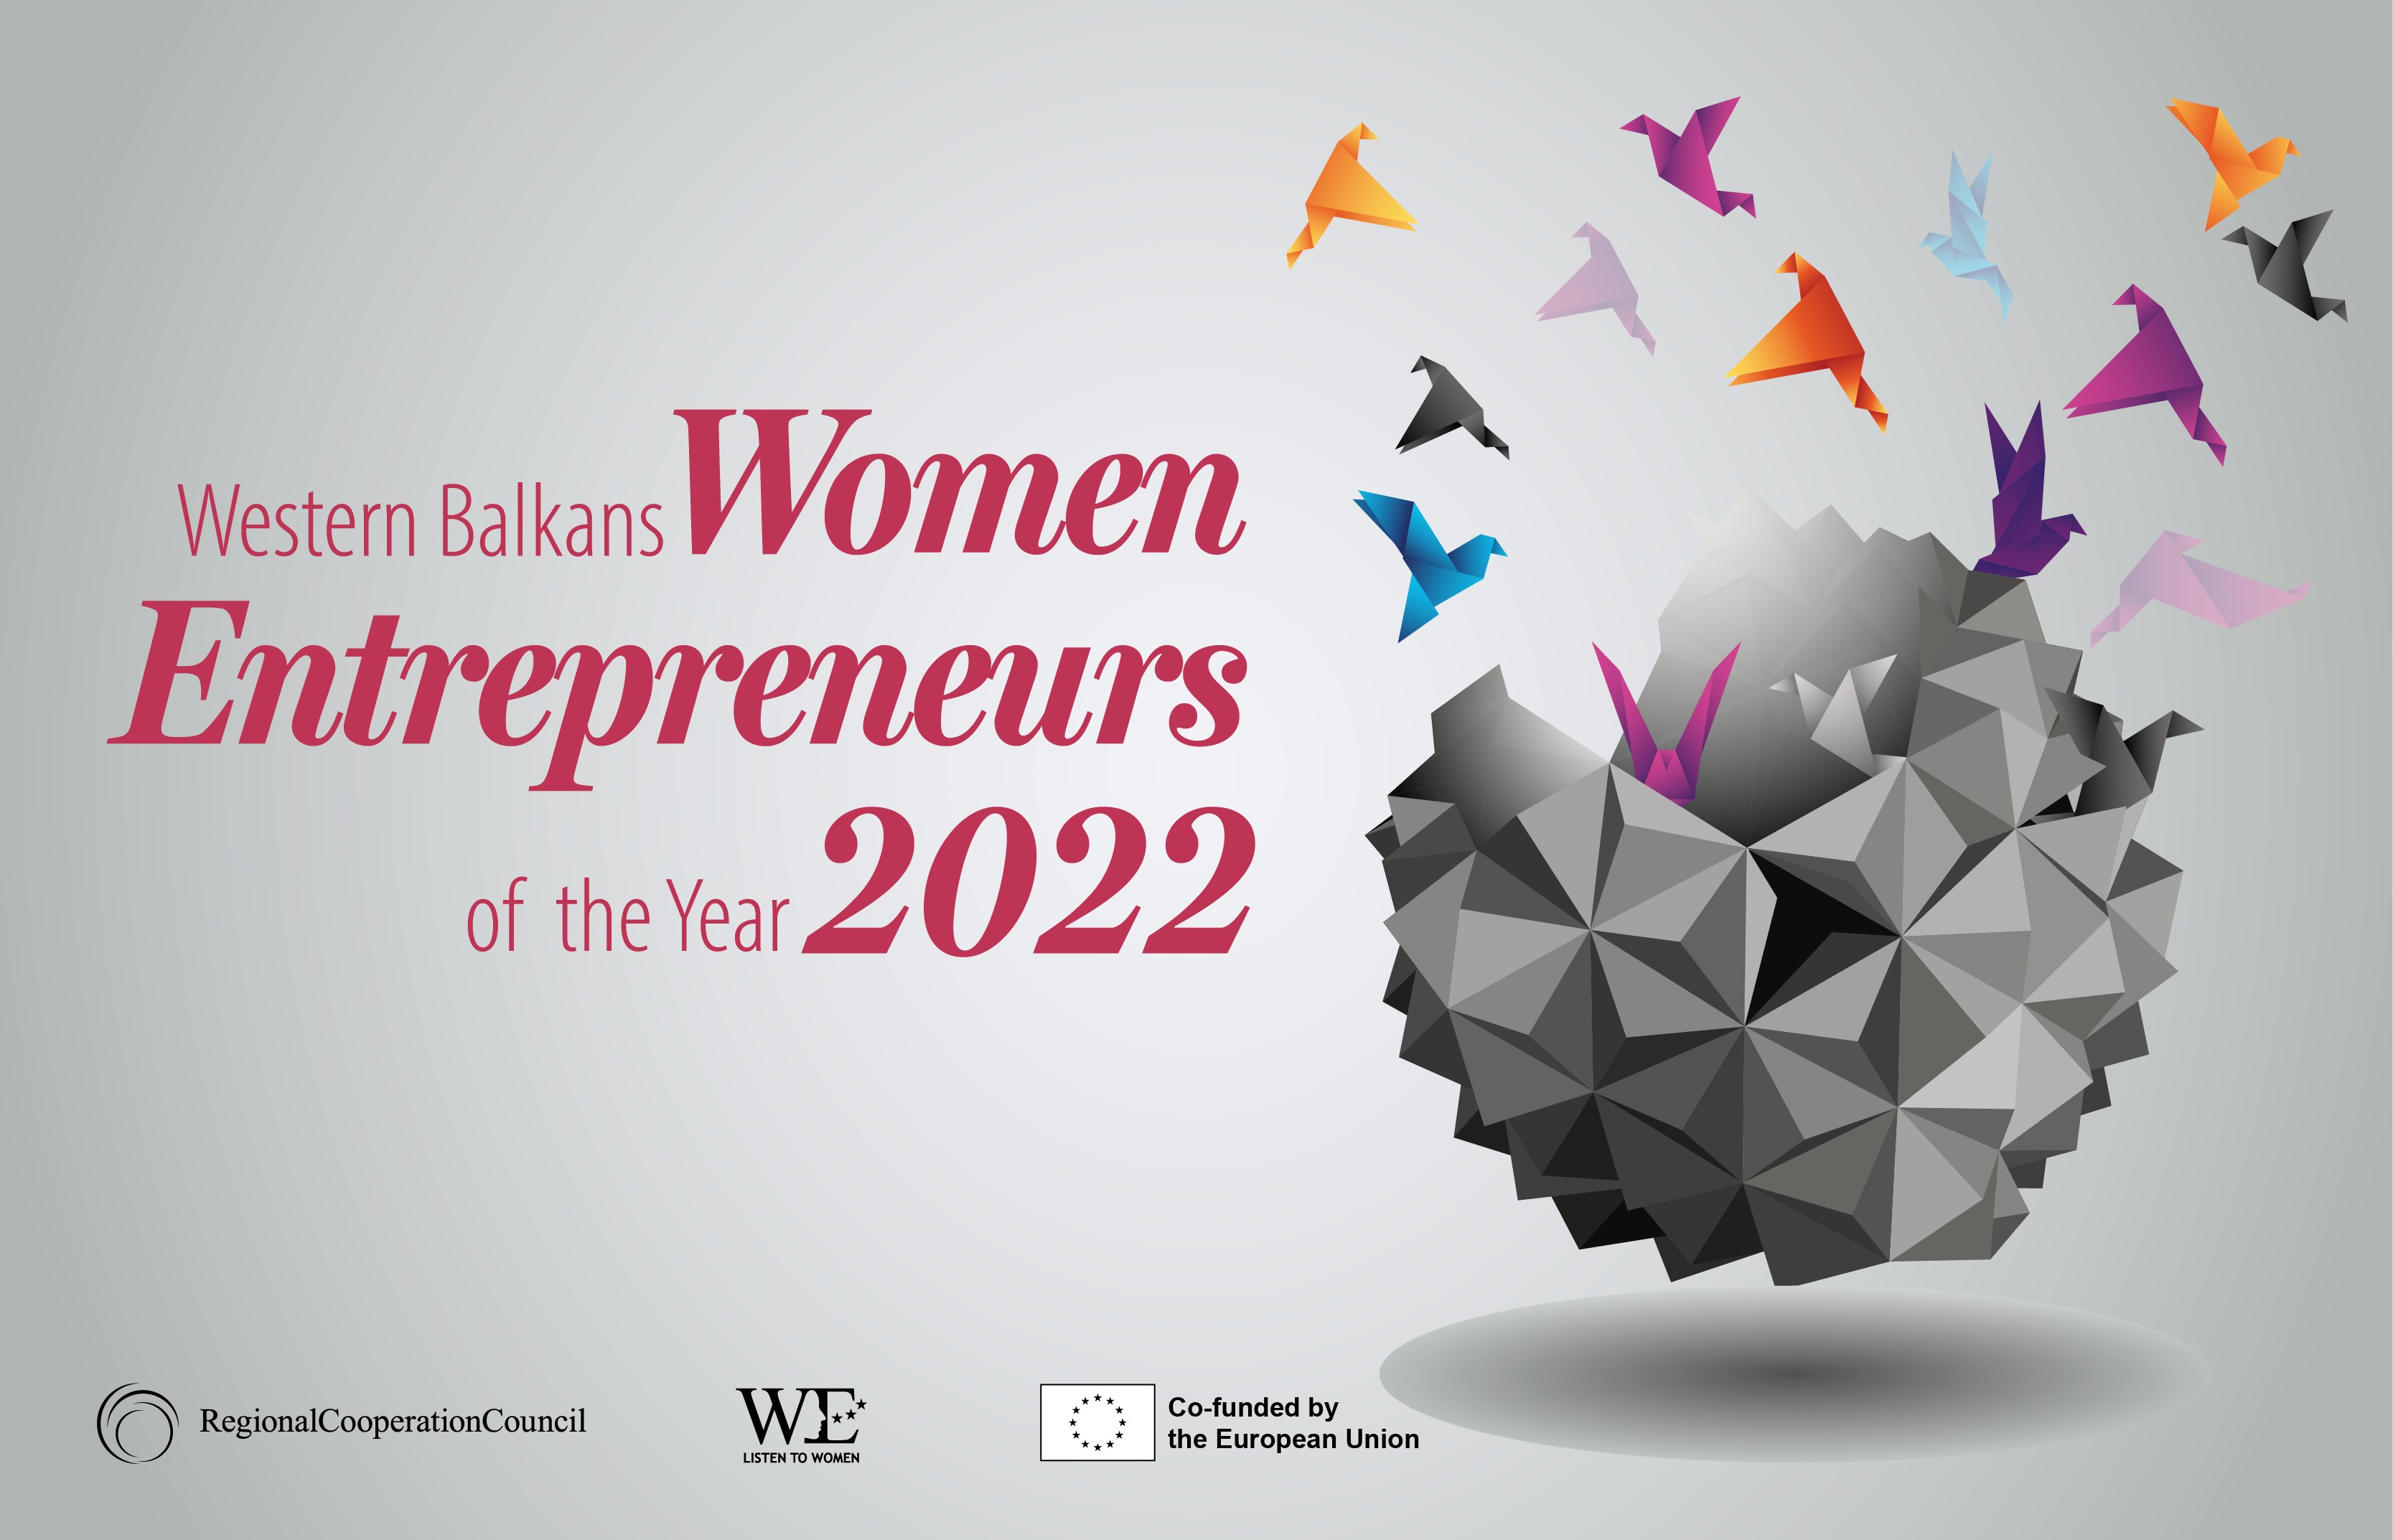 Western Balkans Women Entrepreneurs of the Year 2022